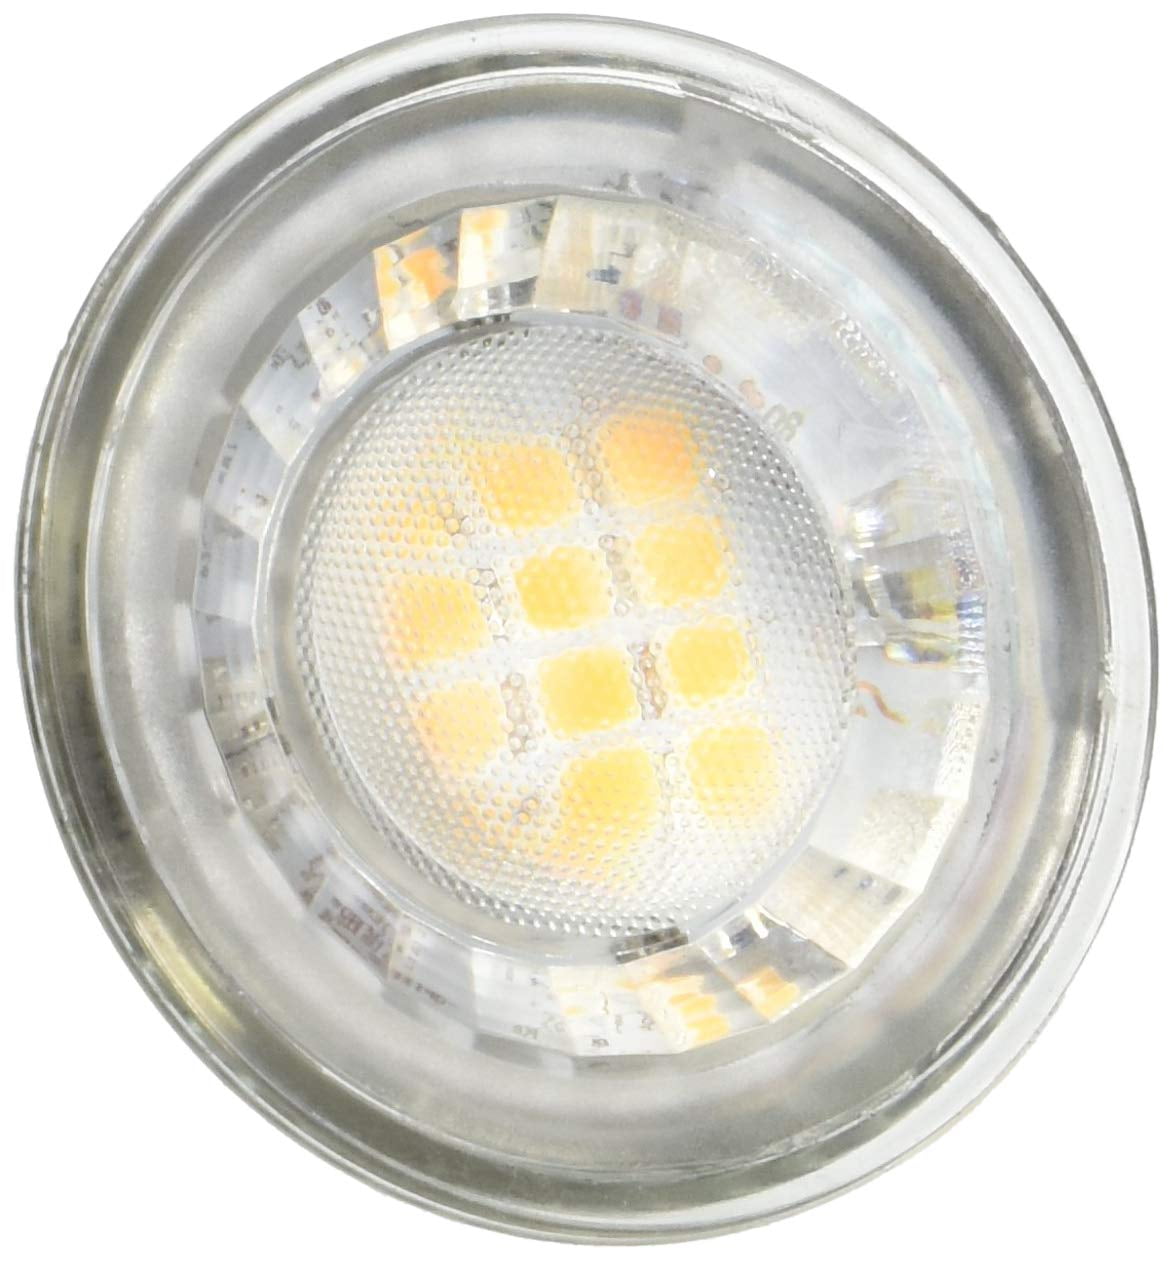 Feit Enhance MR16 GU5.3 LED Bulb Bright White 50 Watt Equivalence 3 pk 